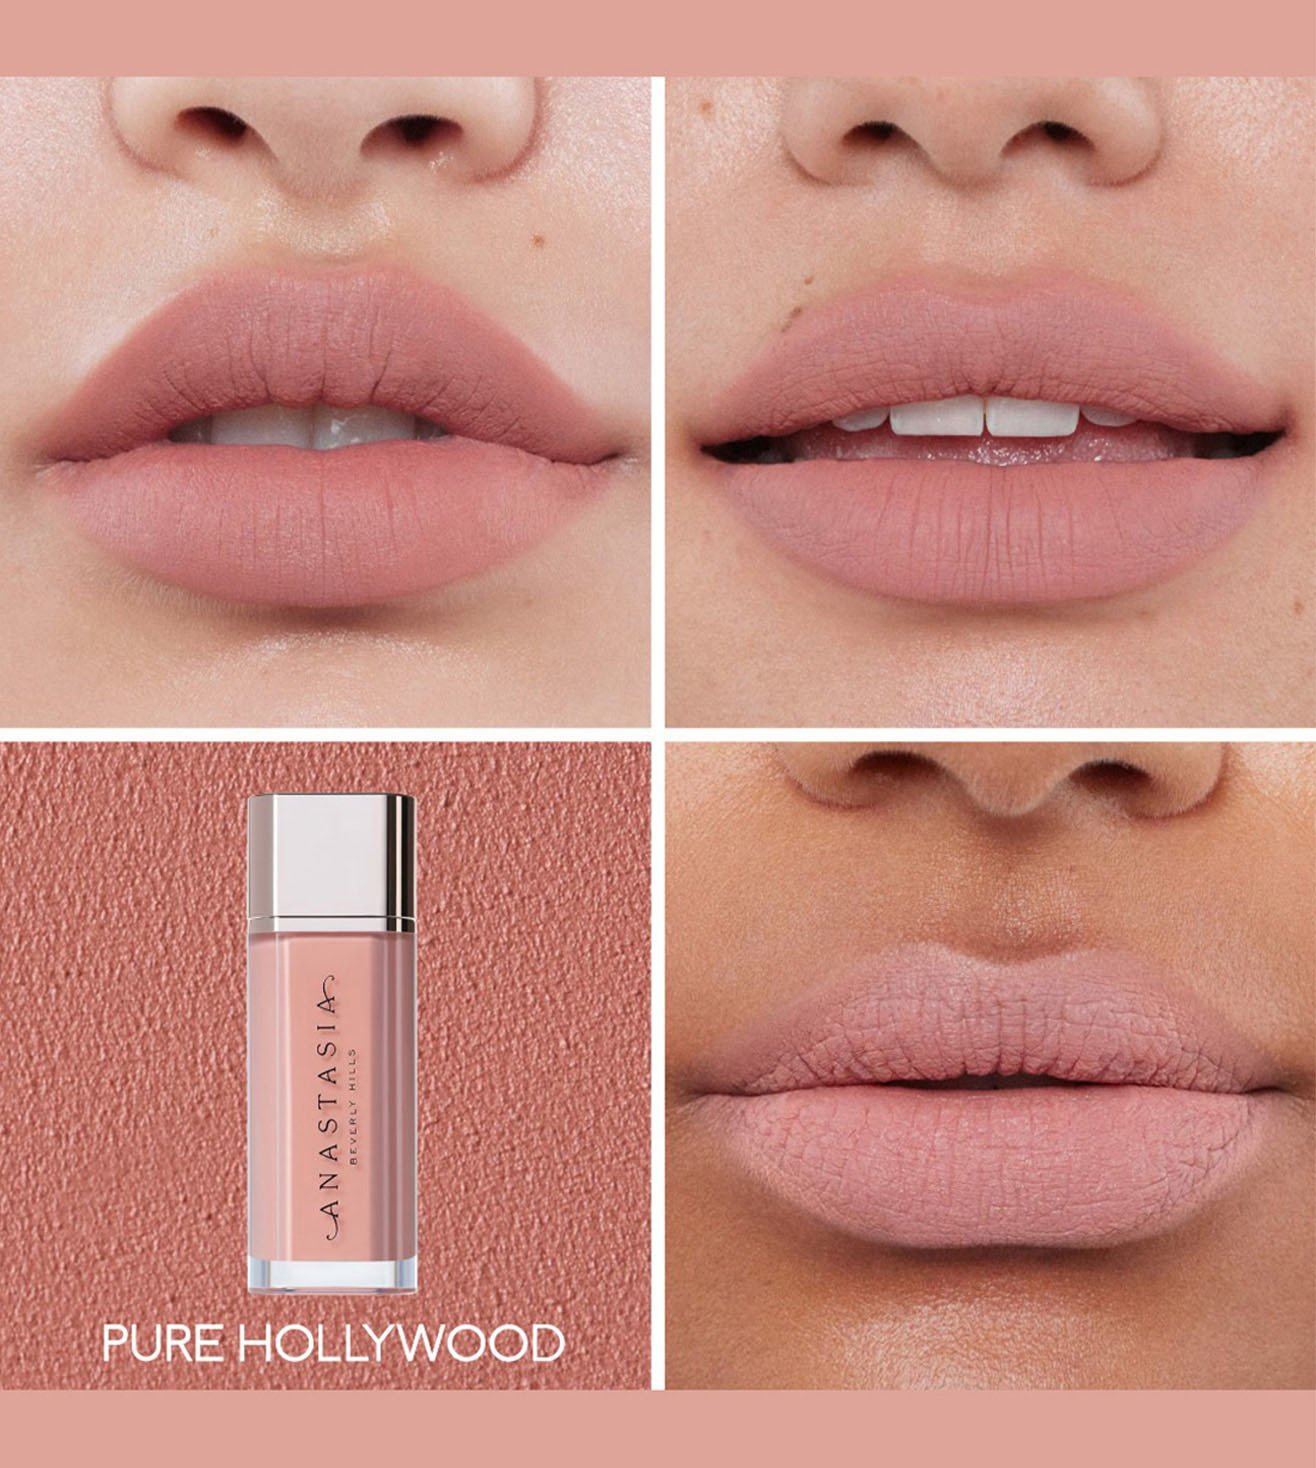 Pure Hollywood Lip Velvet! Smooth, sleek, and oh-so-chic 👄 #ABHLipVelvets  #AnastasiaBeverlyHills